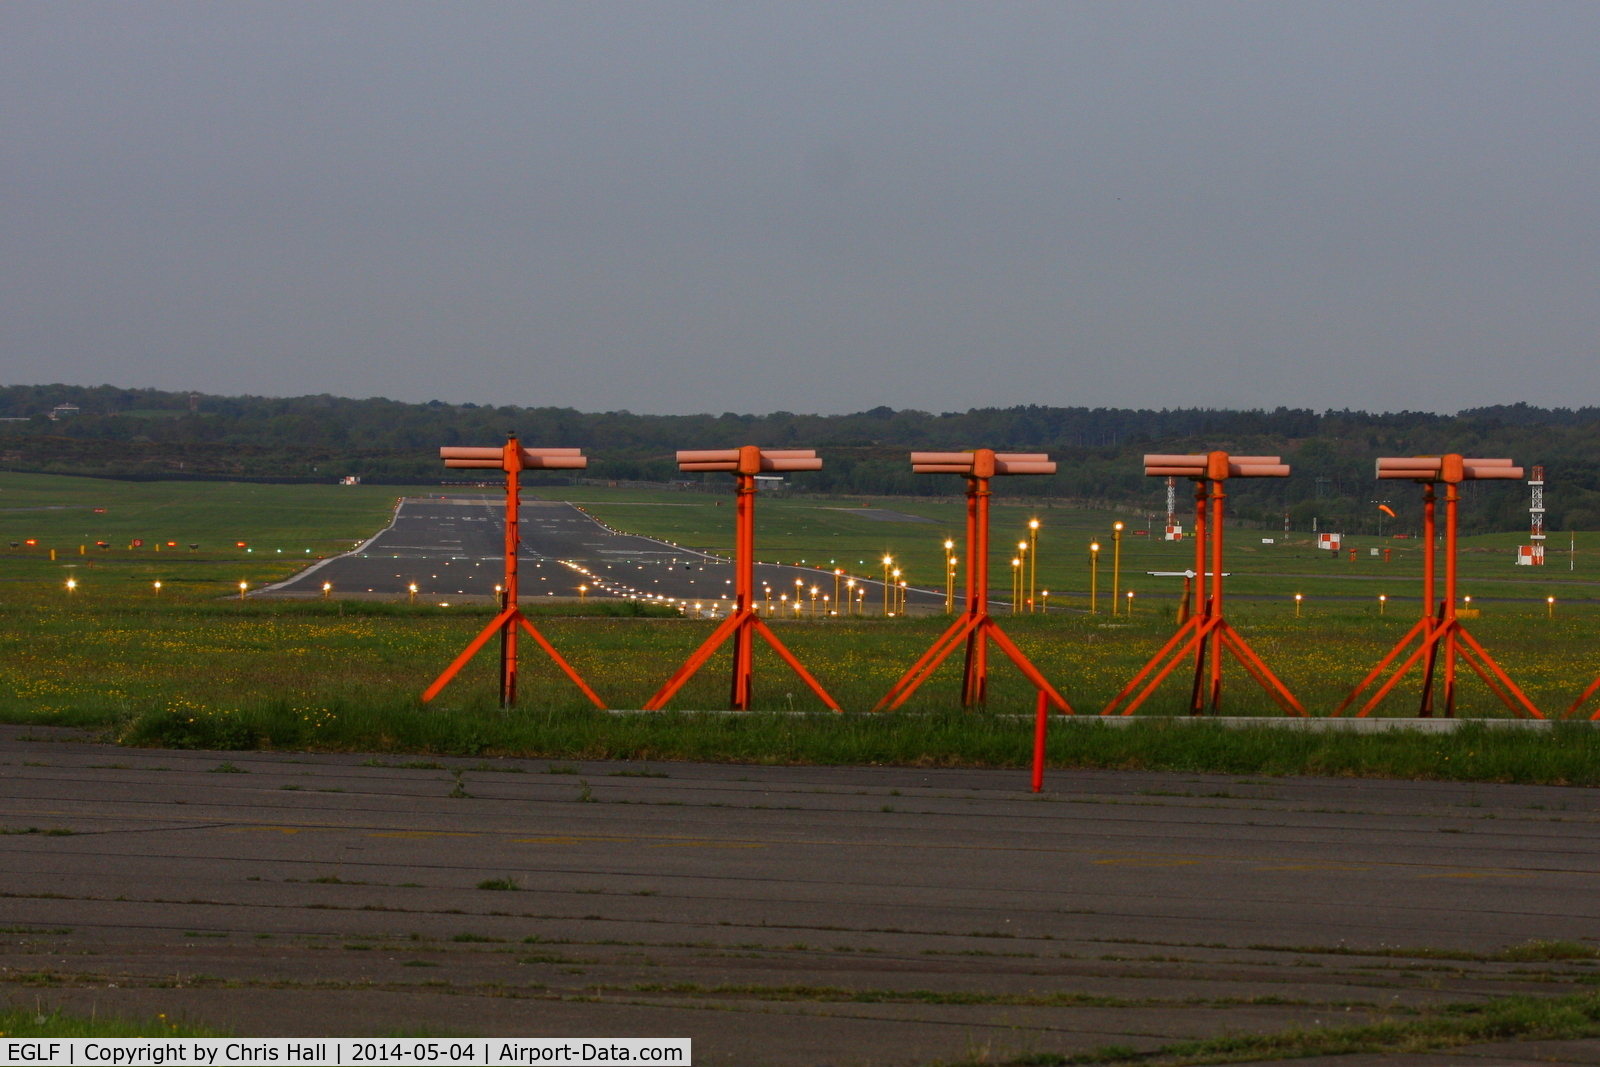 Farnborough Airfield Airport, Farnborough, England United Kingdom (EGLF) - RW24 at Farnborough